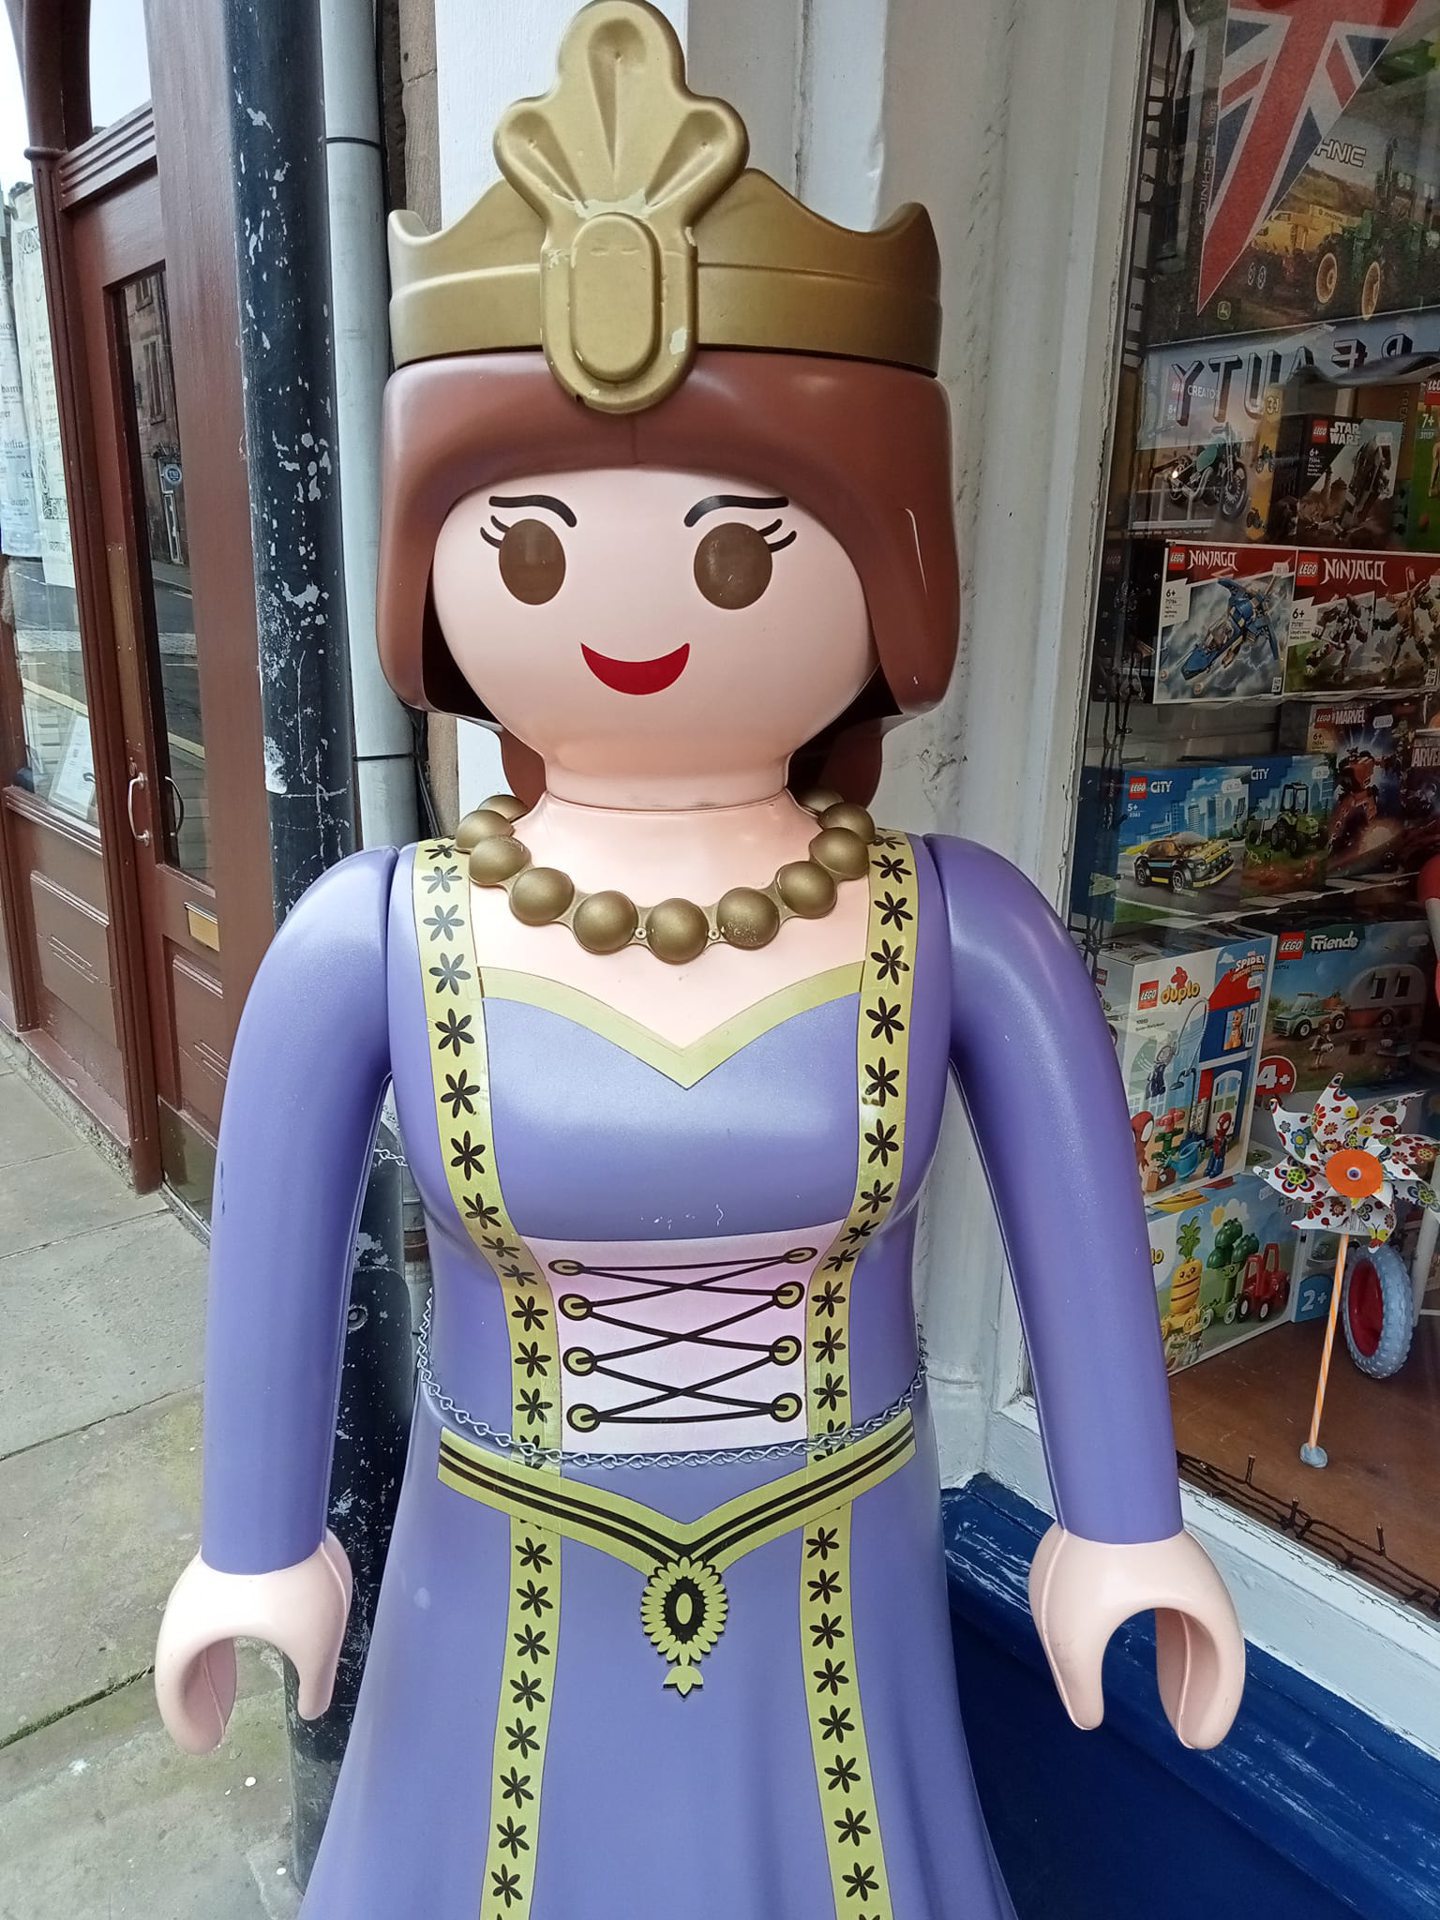 Princess Poppy outside the shop